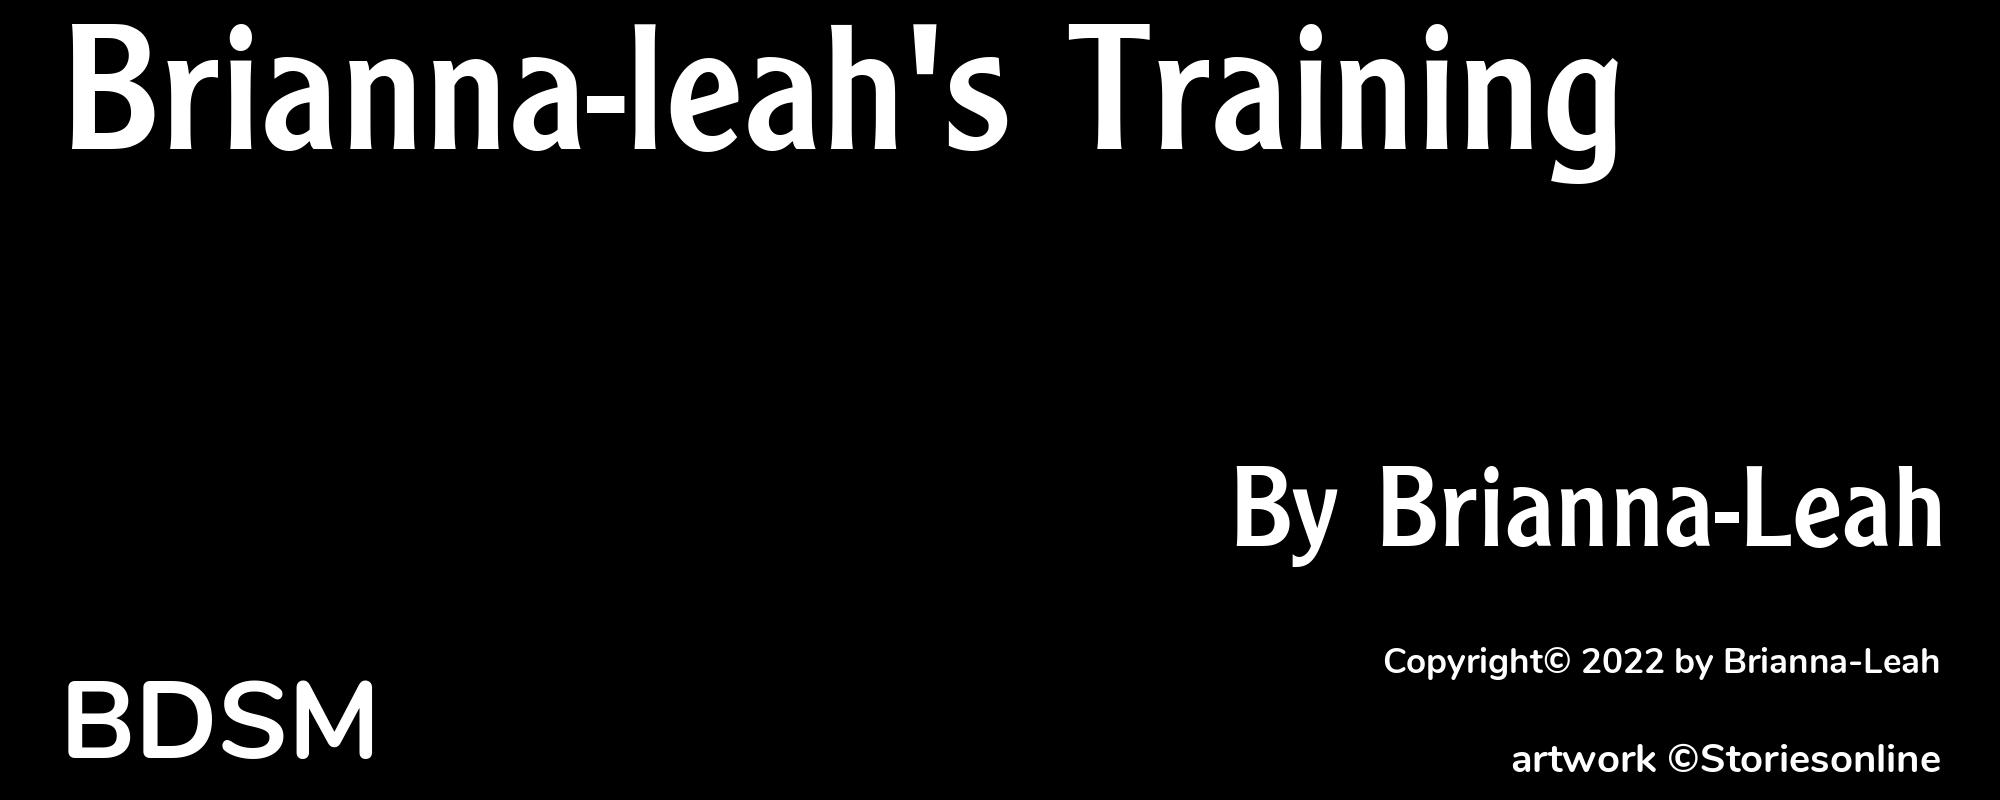 Brianna-leah's Training - Cover